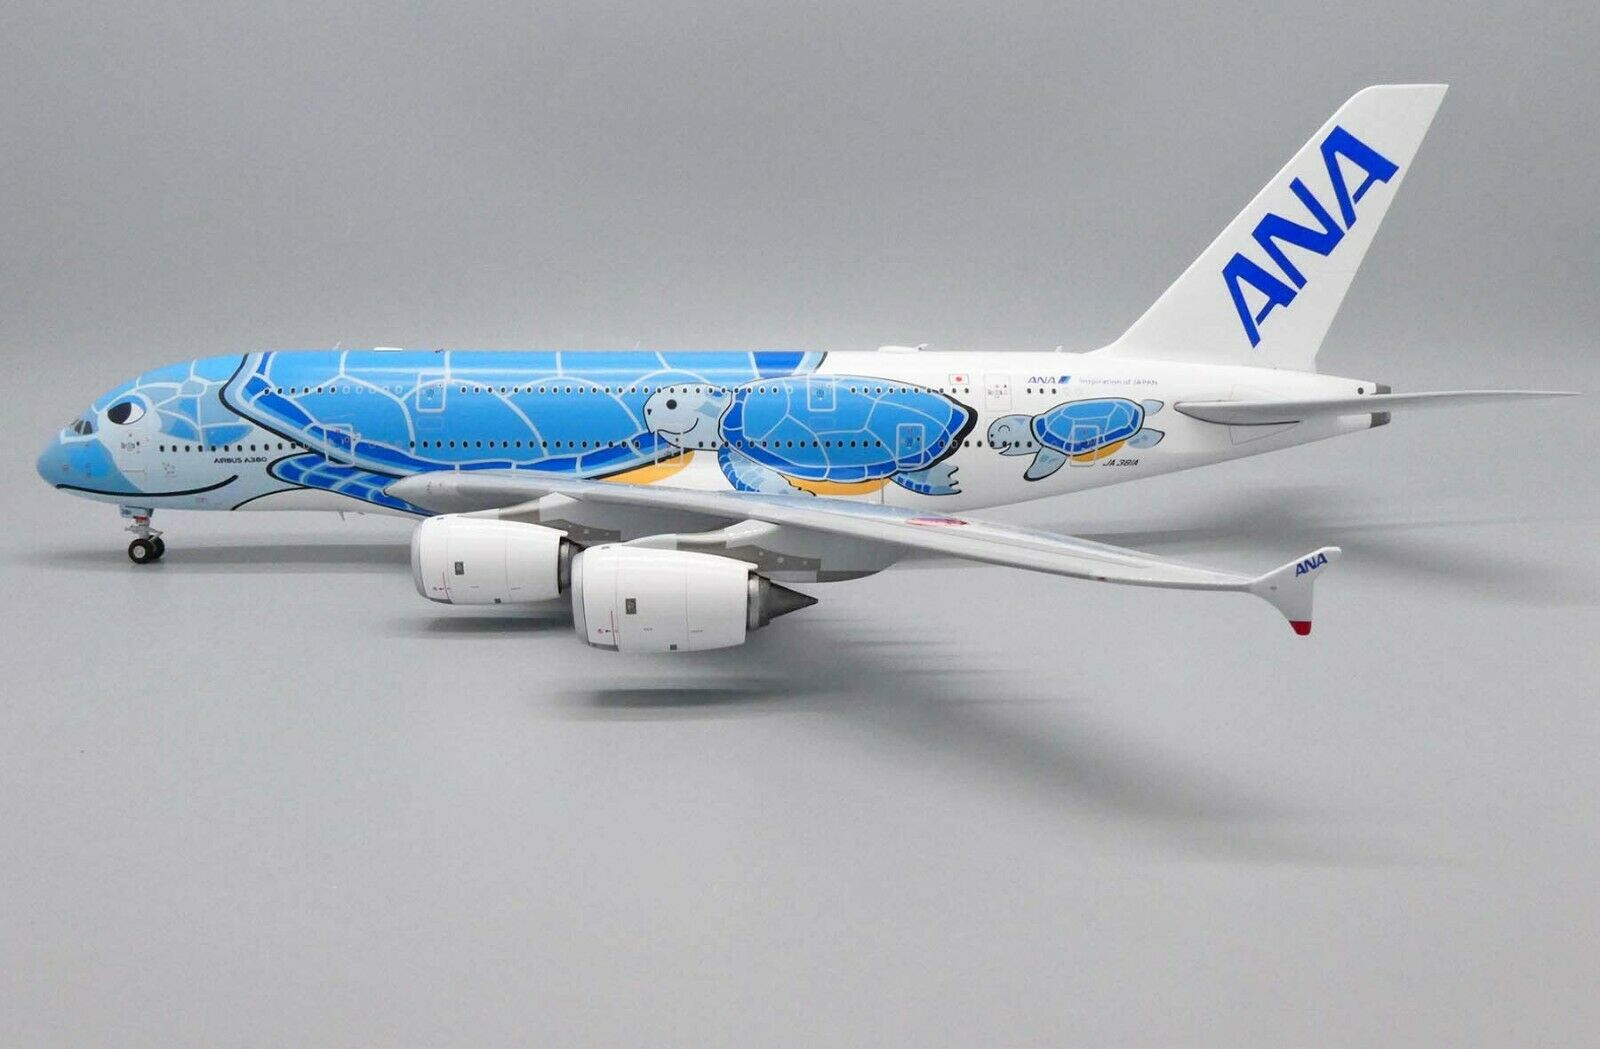 JC Wings 1:200 ANA All Nippon Airways Airbus A380-800 'Flying Honu 